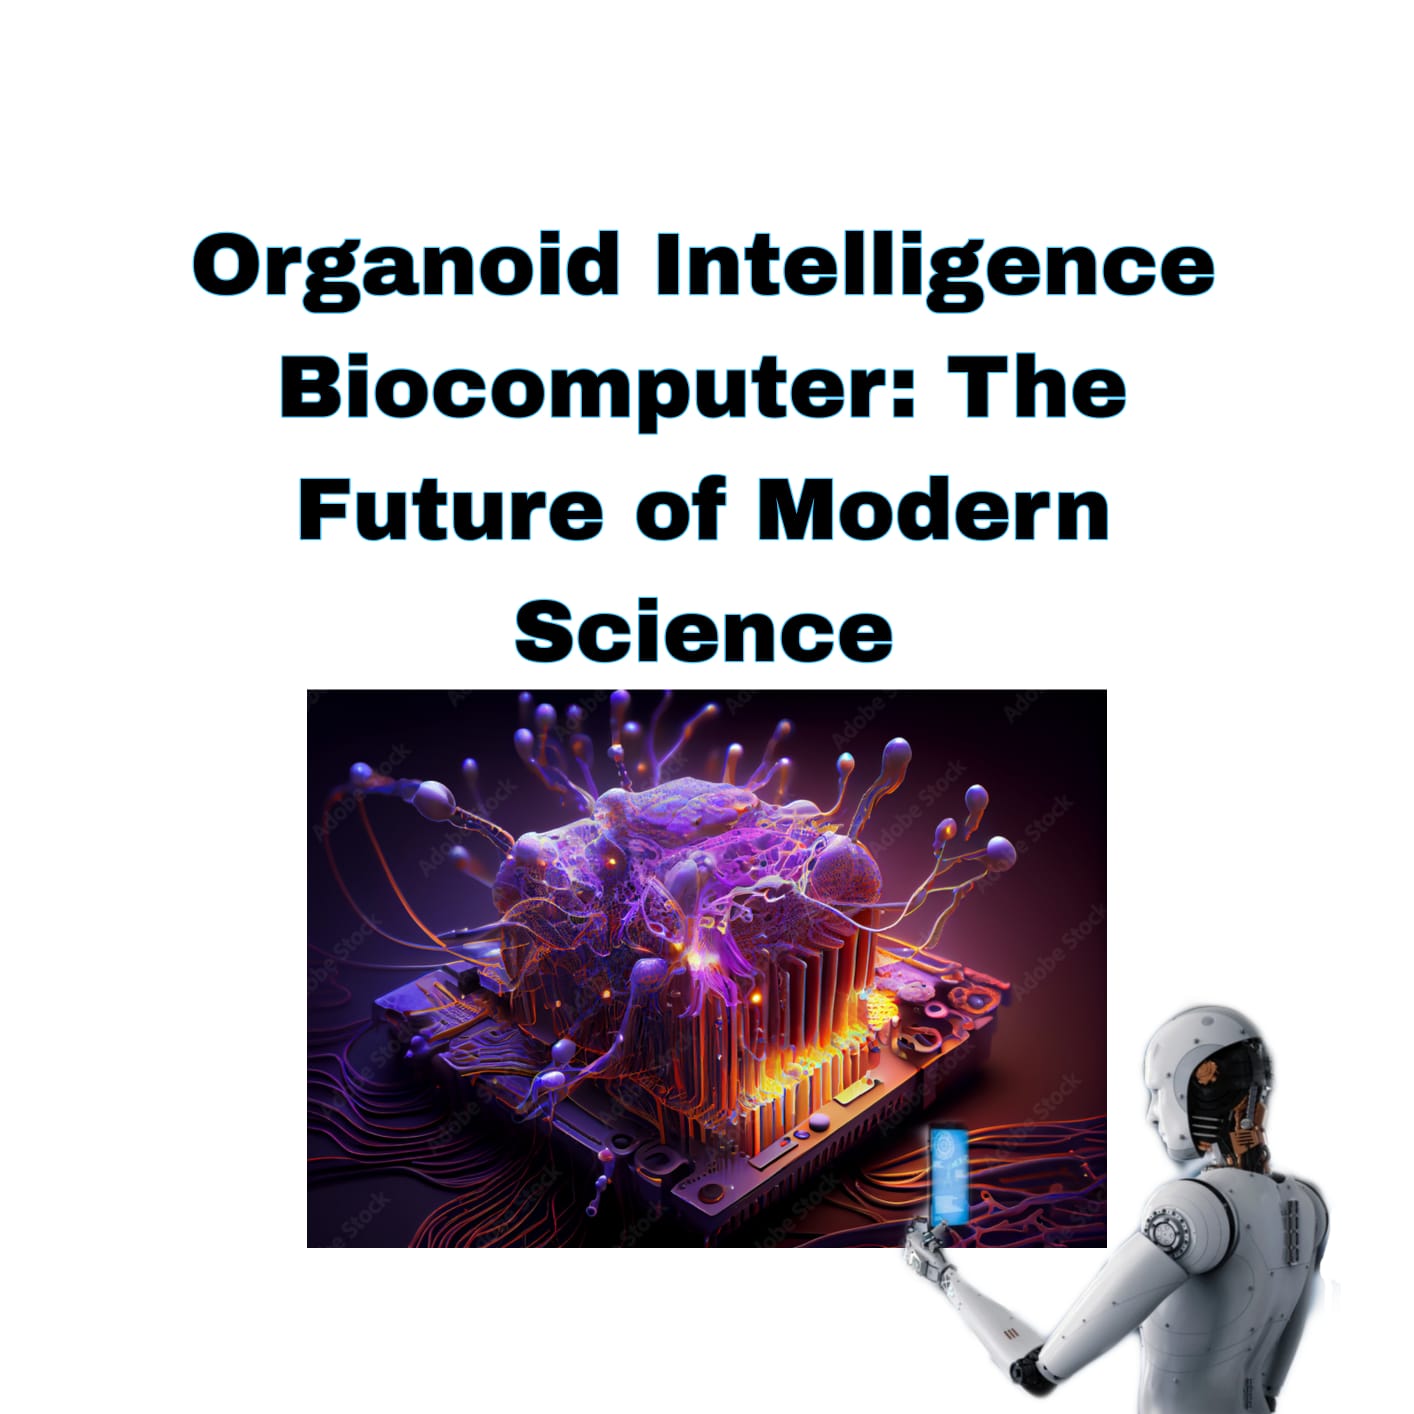 Organoid Intelligence Biocomputer: The Future of Modern Science